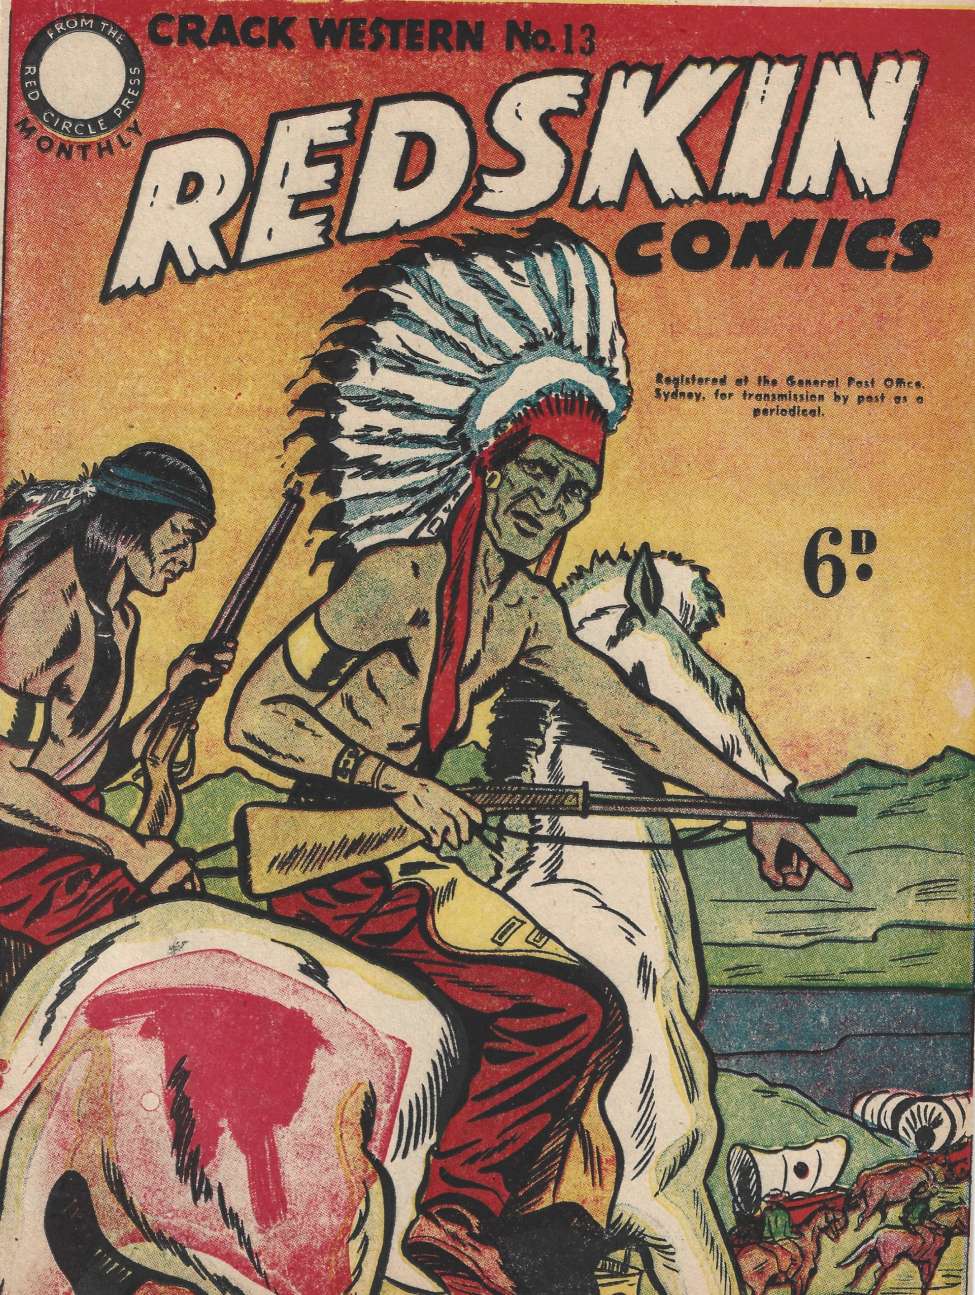 Comic Book Cover For Crack Western 13 - Redskin Comics